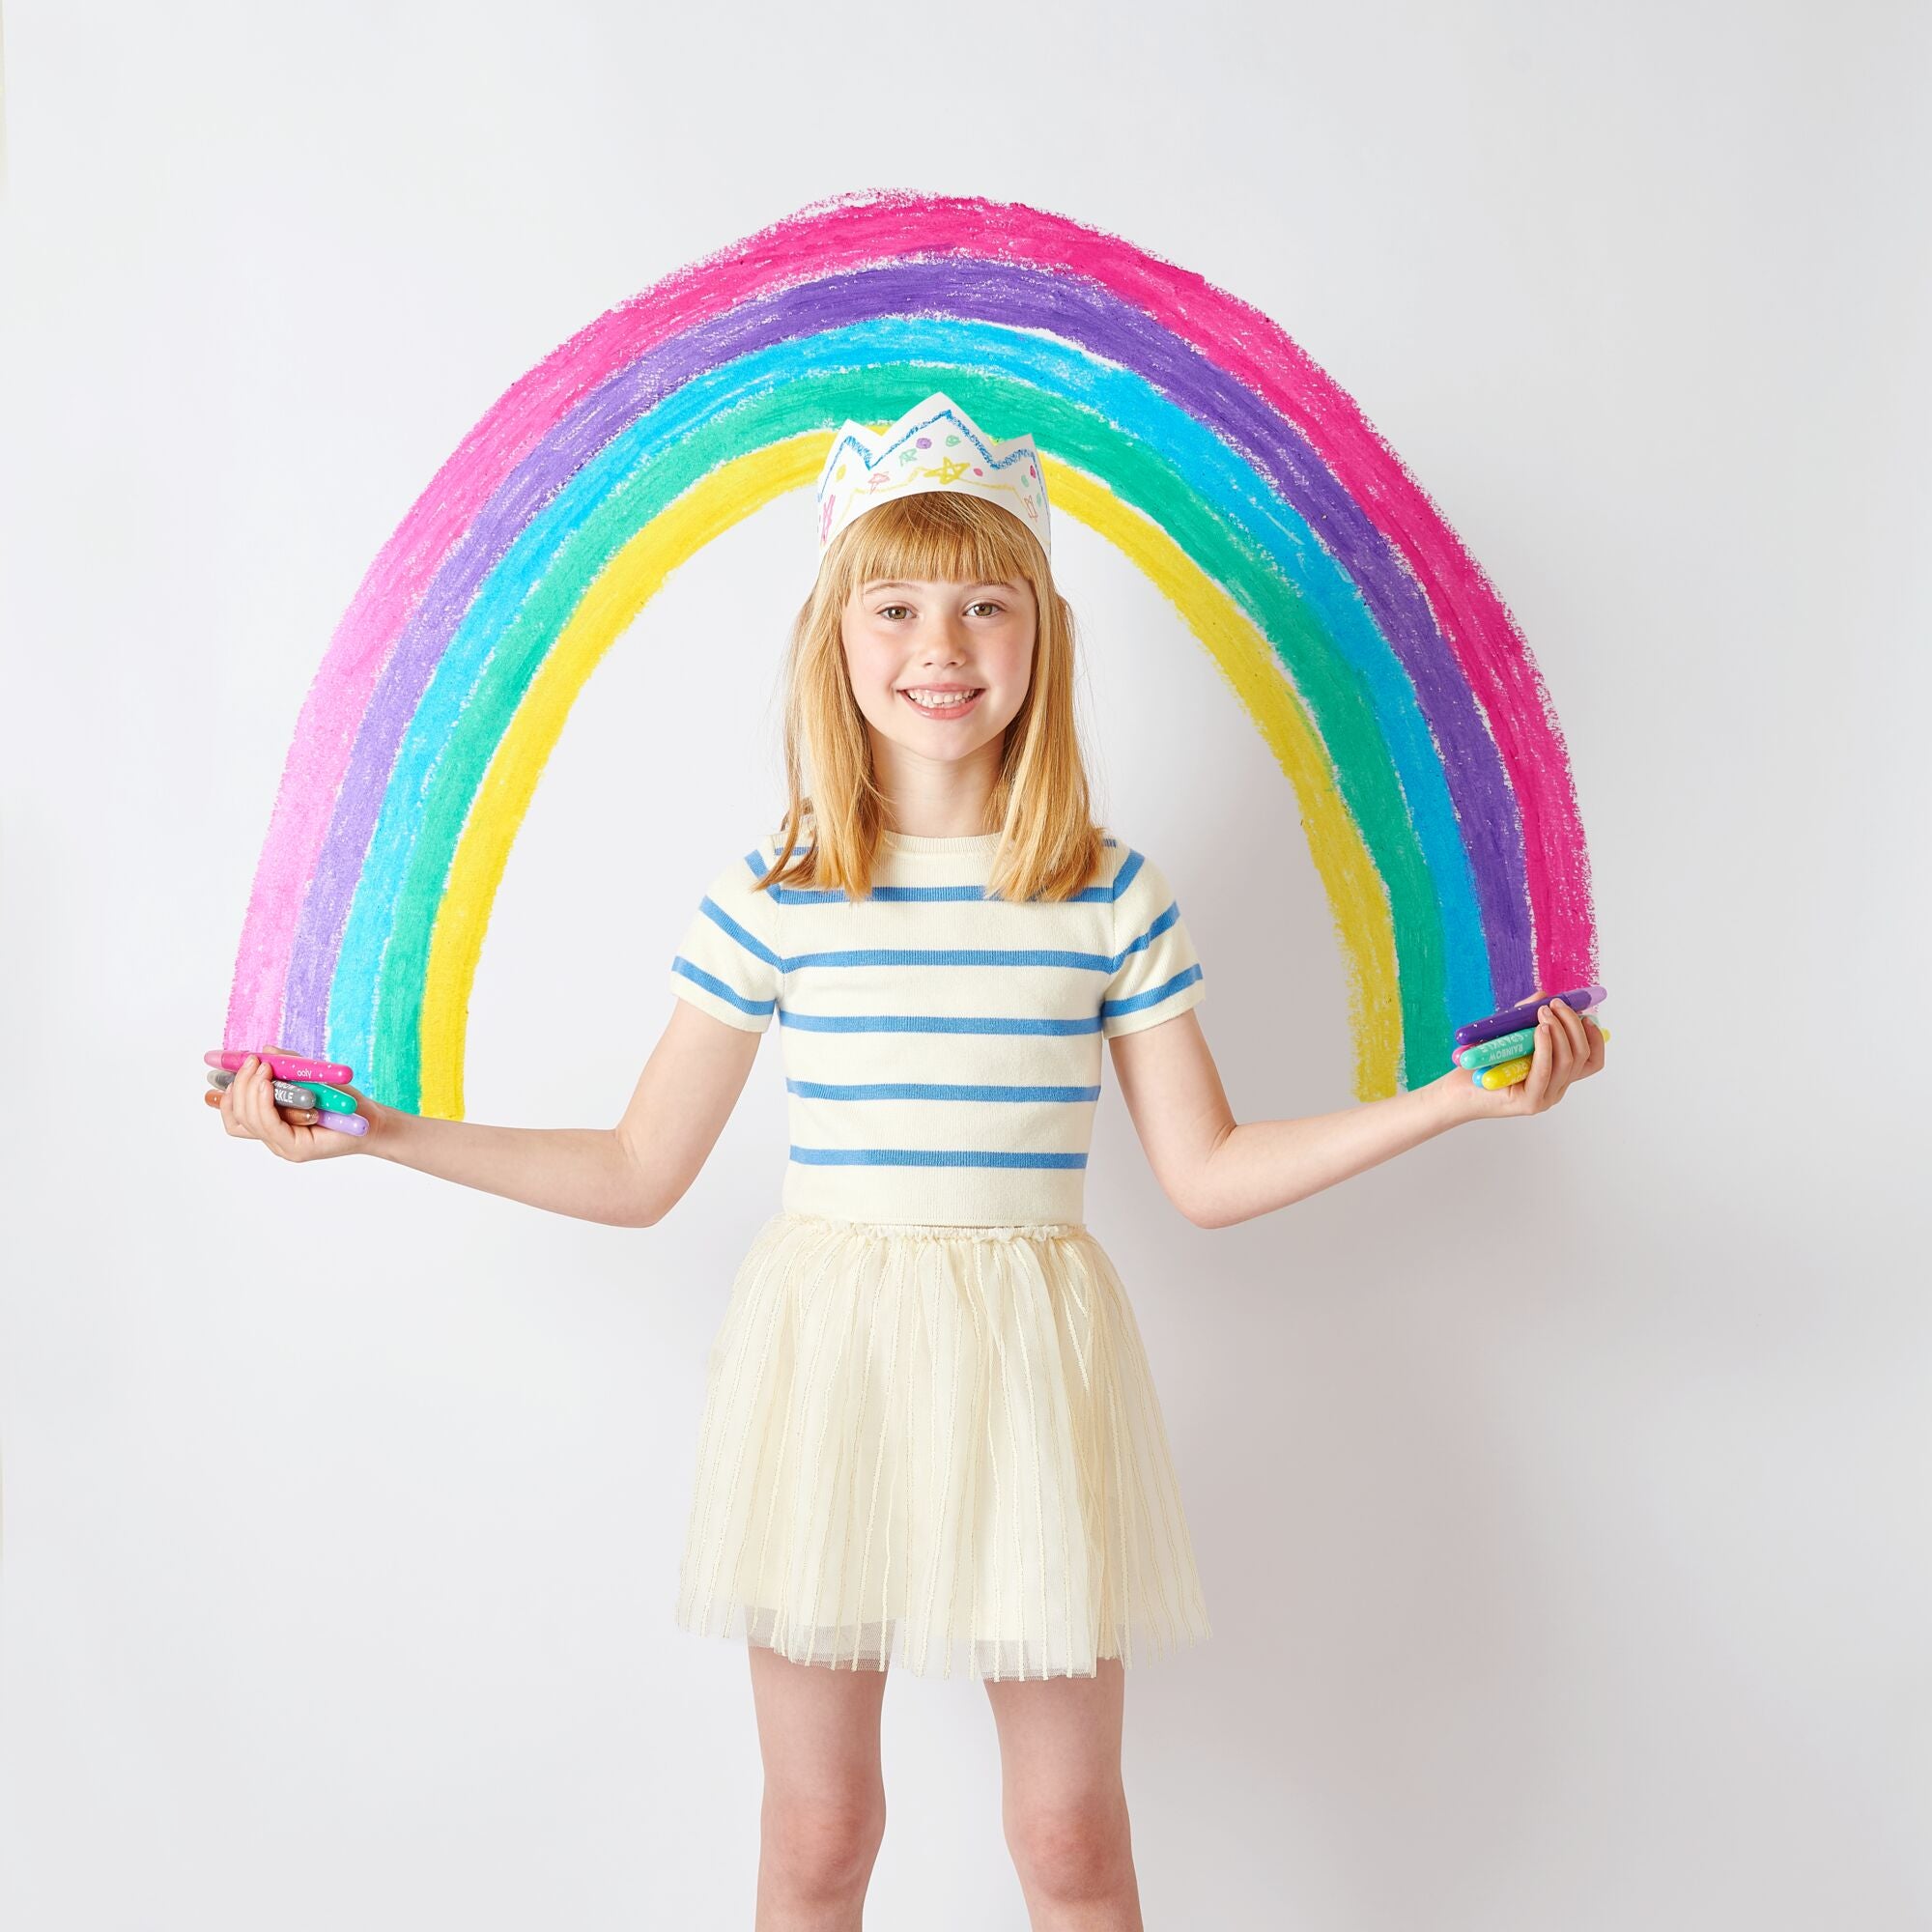 Rainbow Sparkle Watercolor Gel Crayons - OOLY